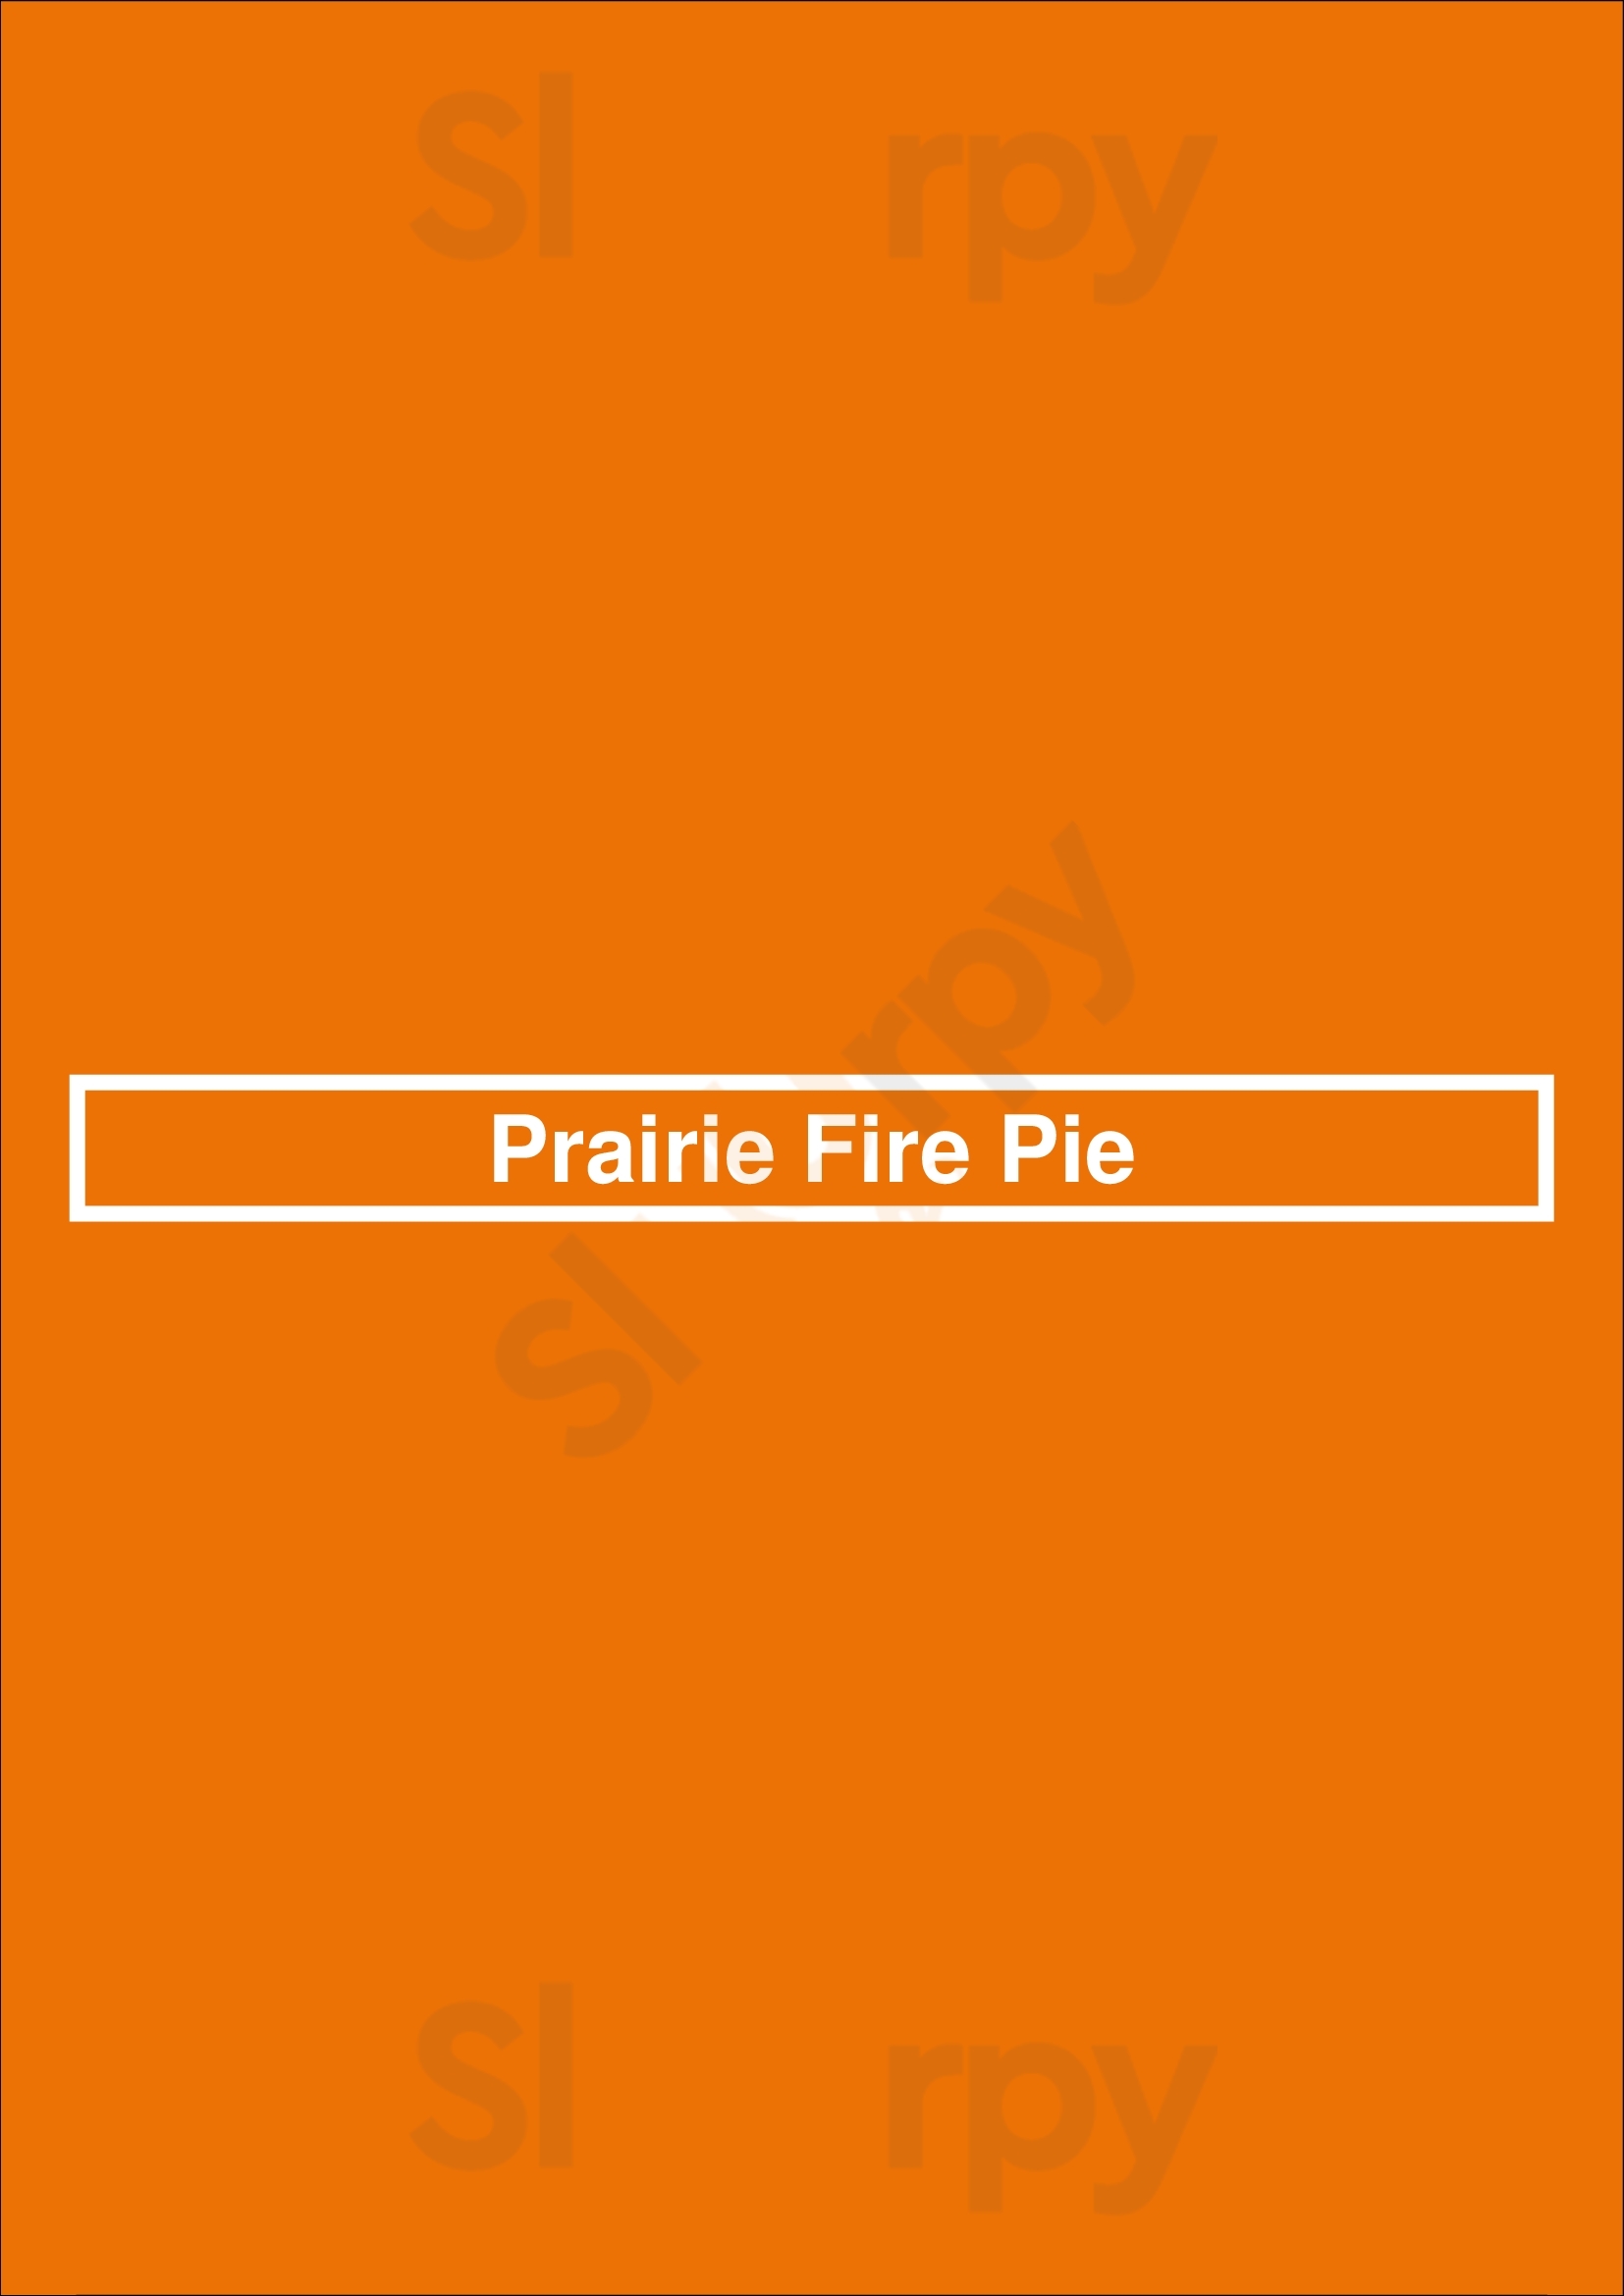 Prairie Fire Pie Tulsa Menu - 1